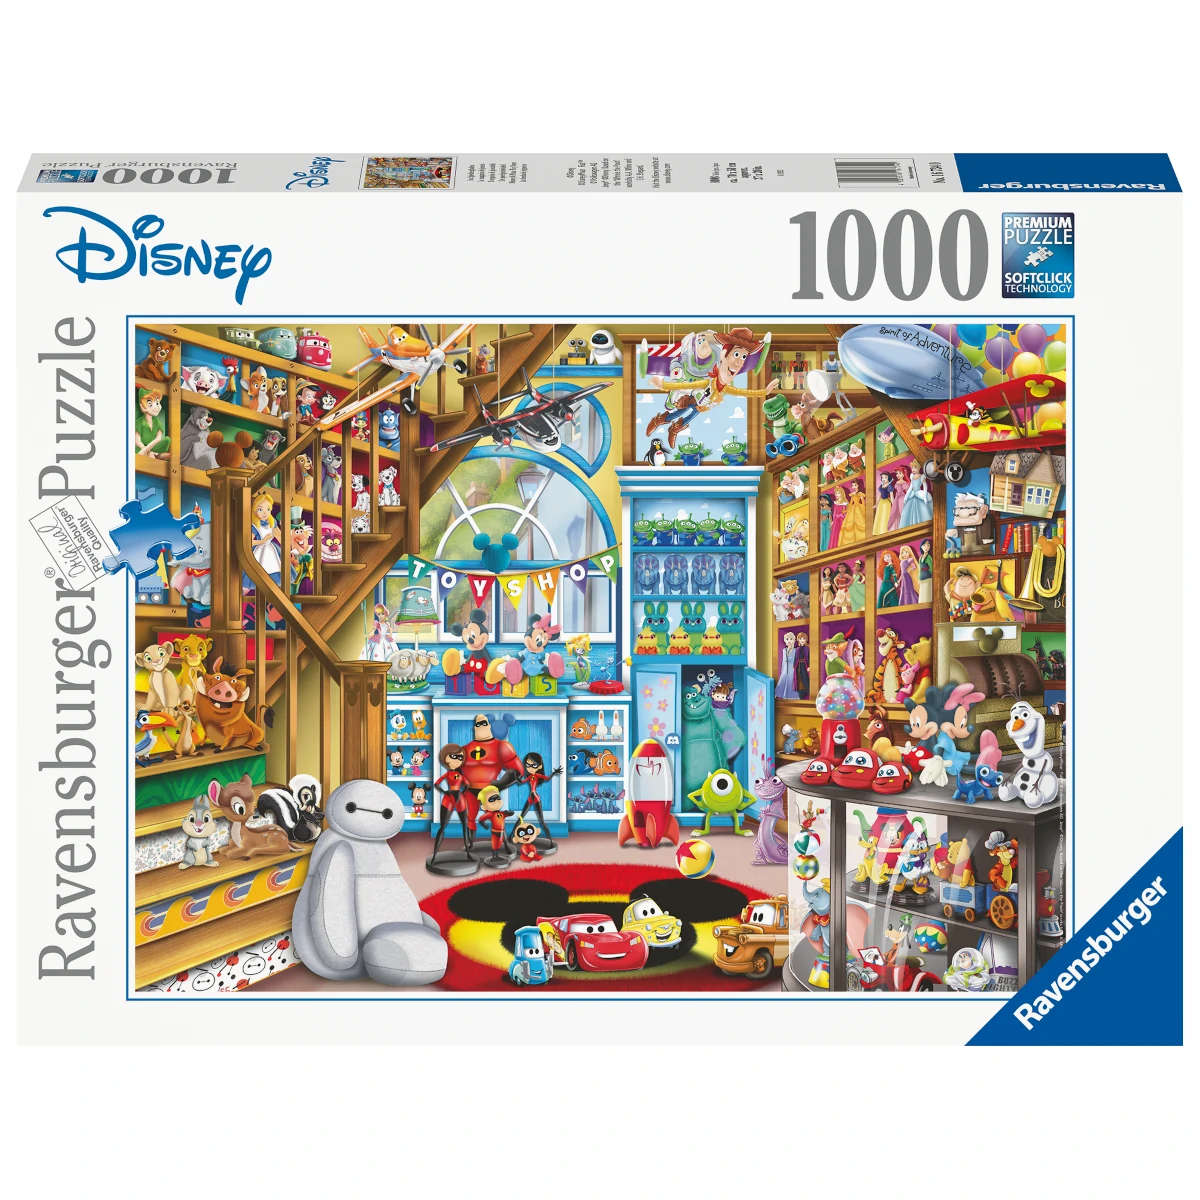 Ravensburger Disney Pixar Toy Store 1000 pc Puzzle